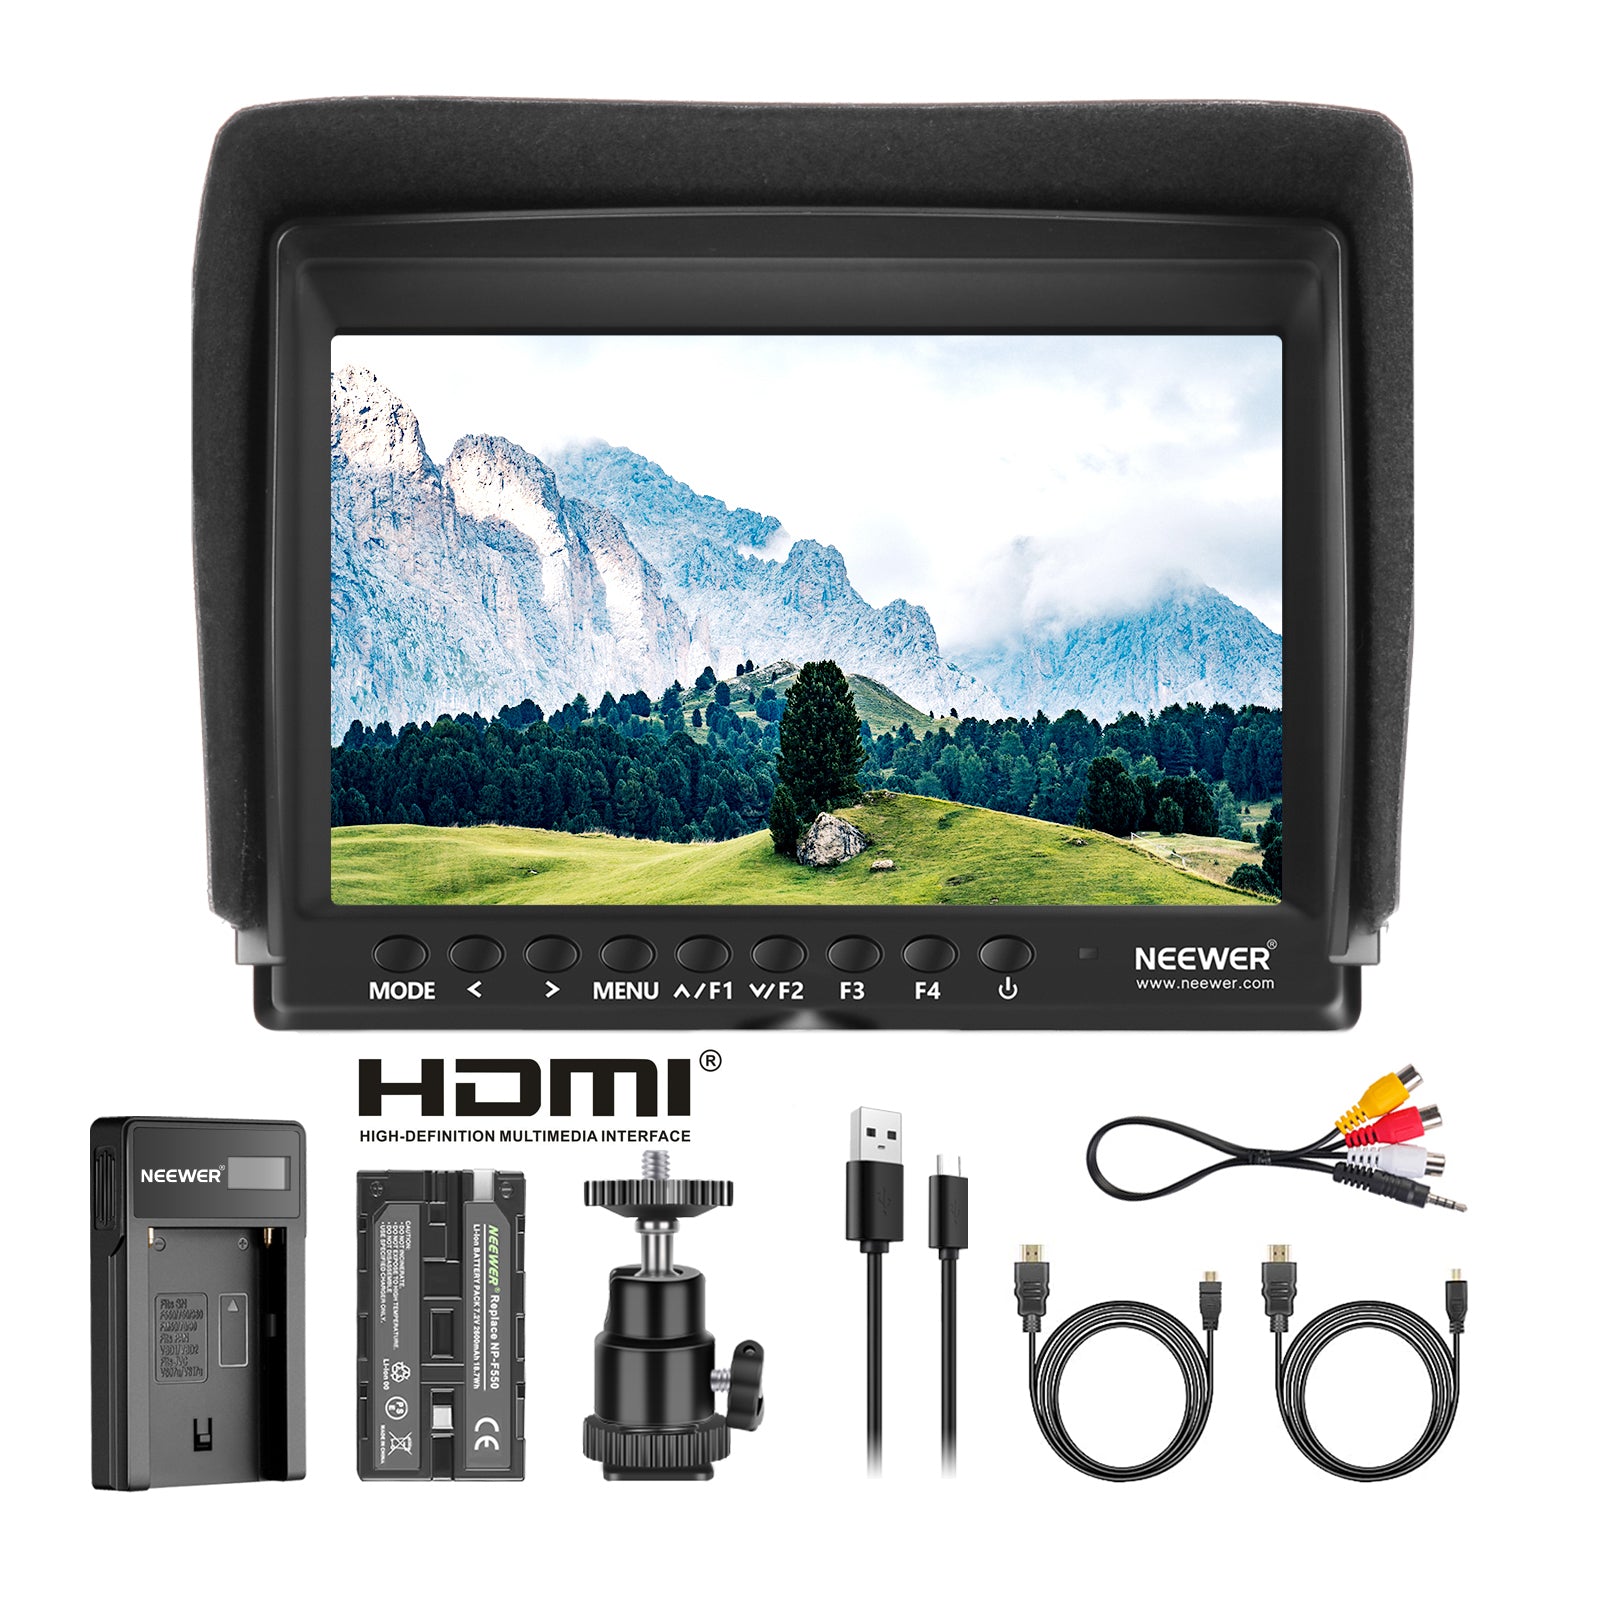 NEEWER F100 7 Inch HD Camera Field Monitor Kit